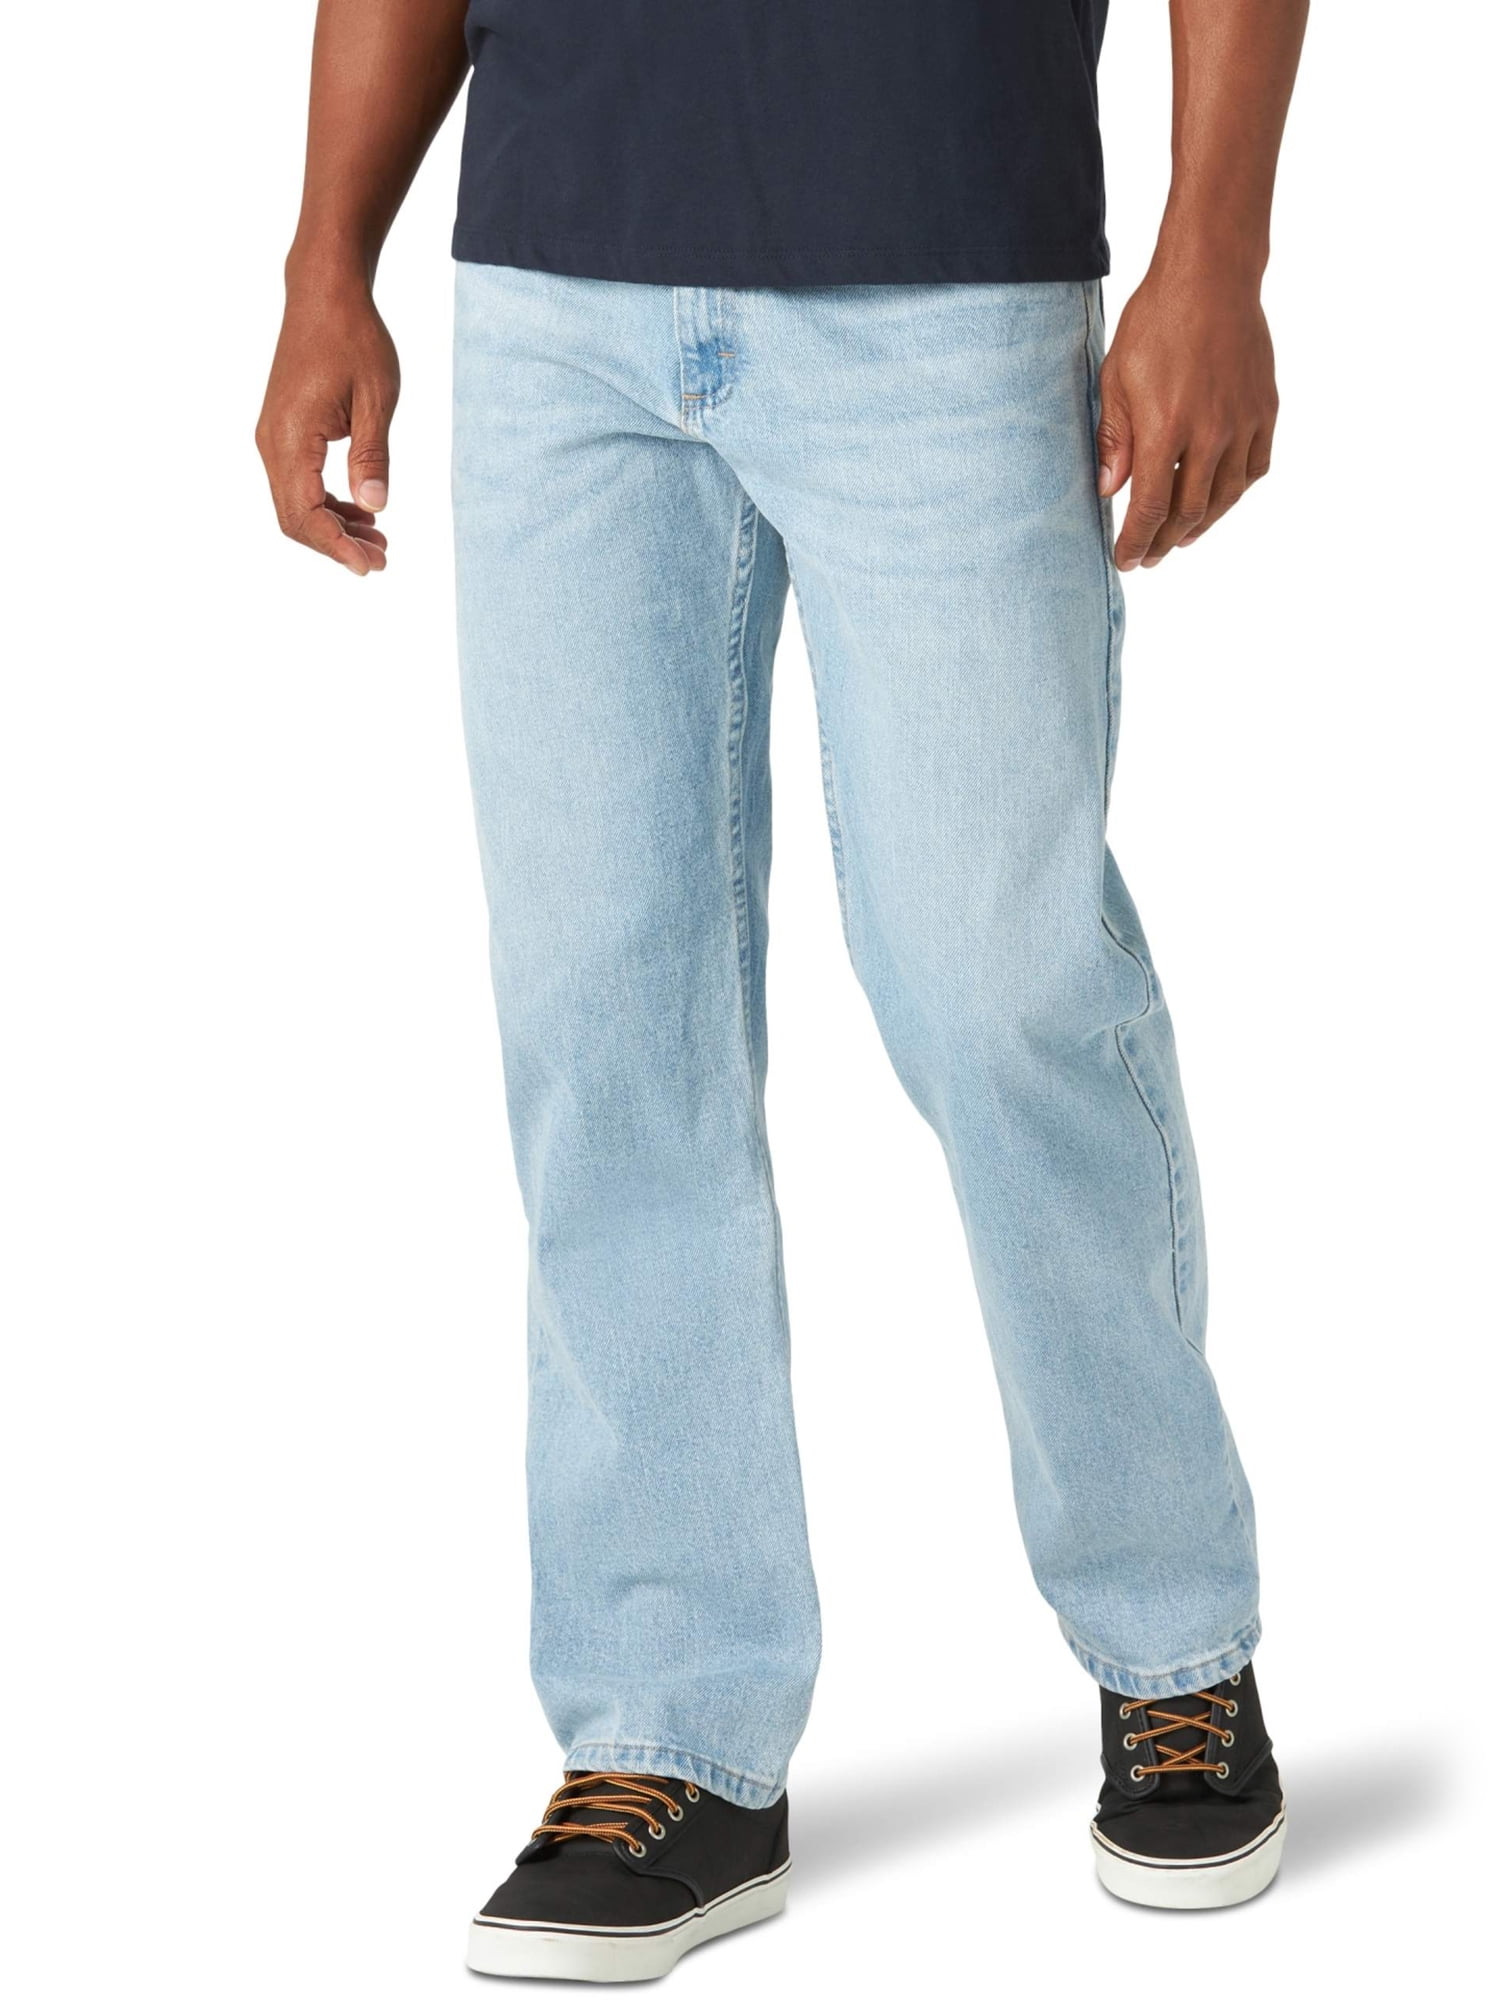 walmart brand mens jeans